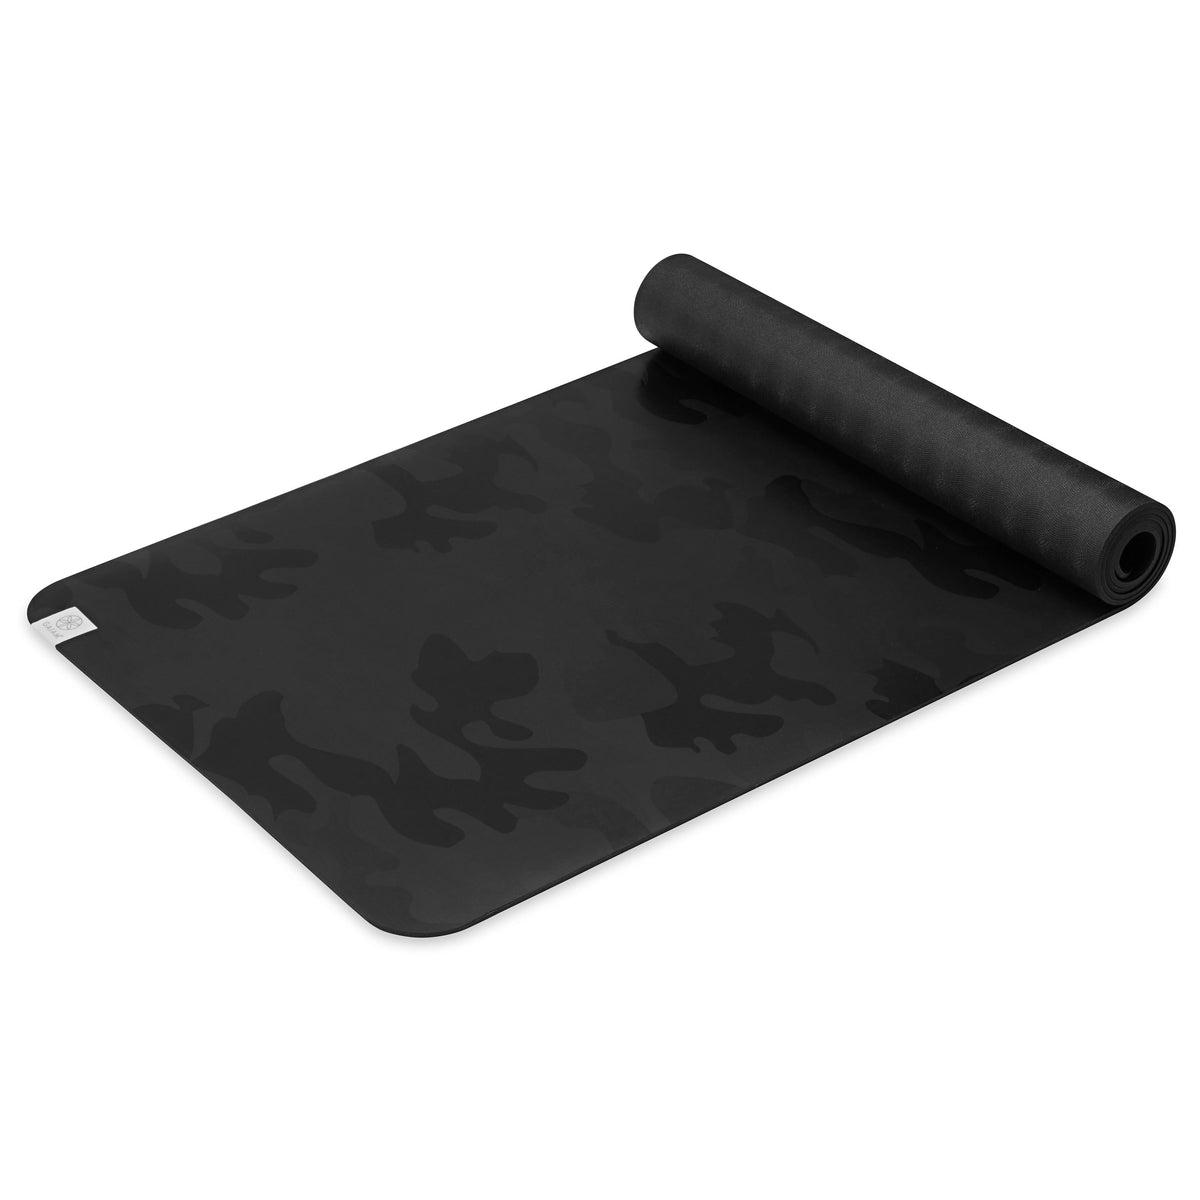 lululemon The Reversible Yoga Mat 5mm - Black, Gifts